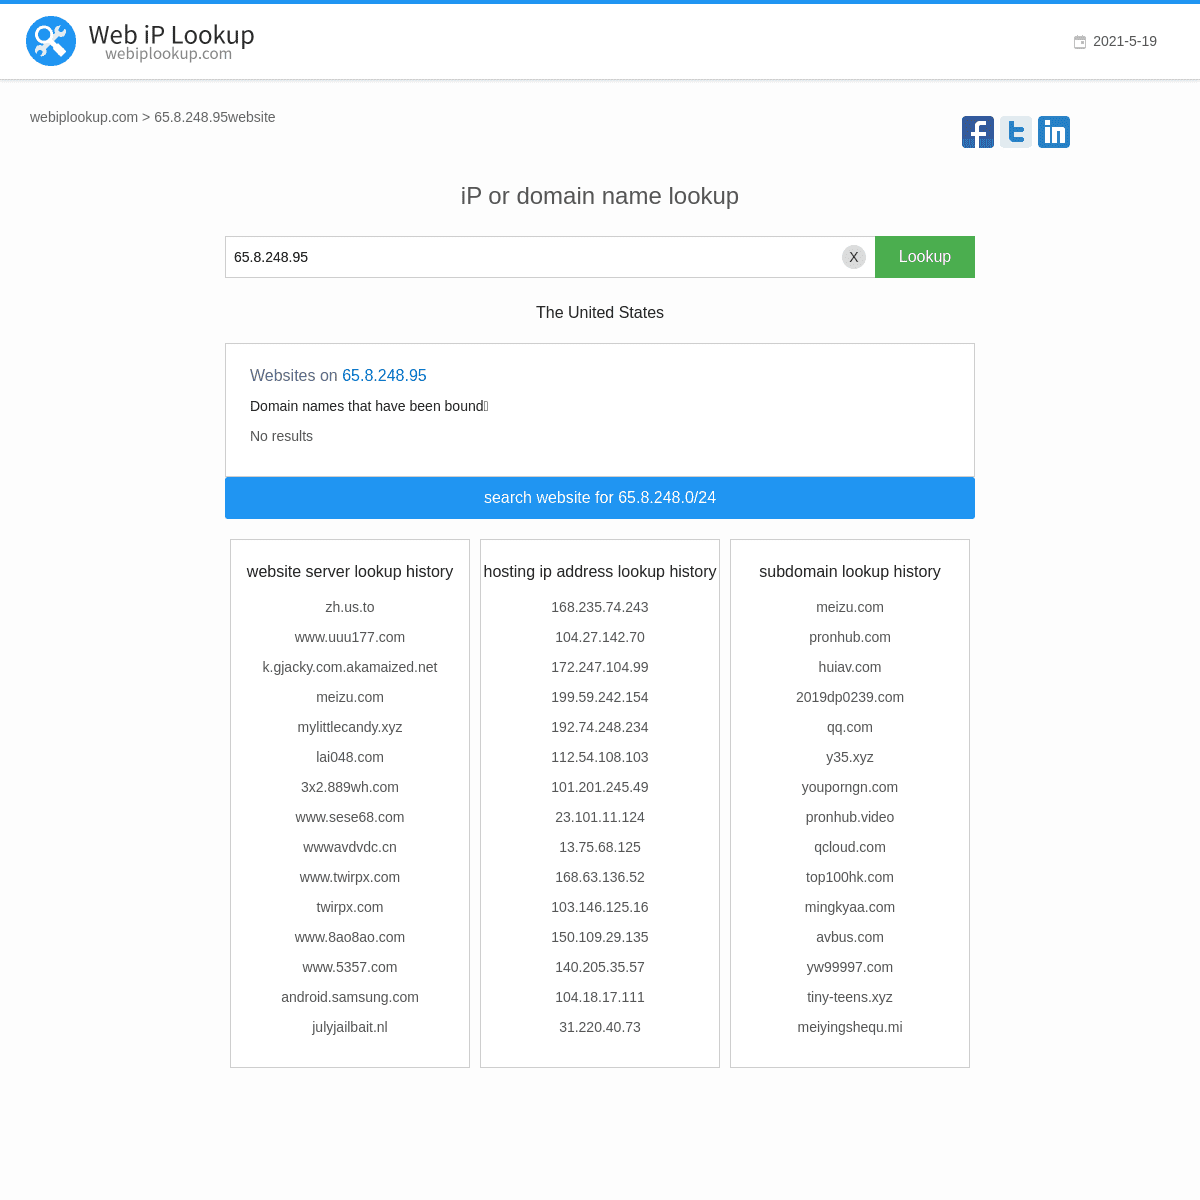 A complete backup of https://webiplookup.com/65.8.248.95/